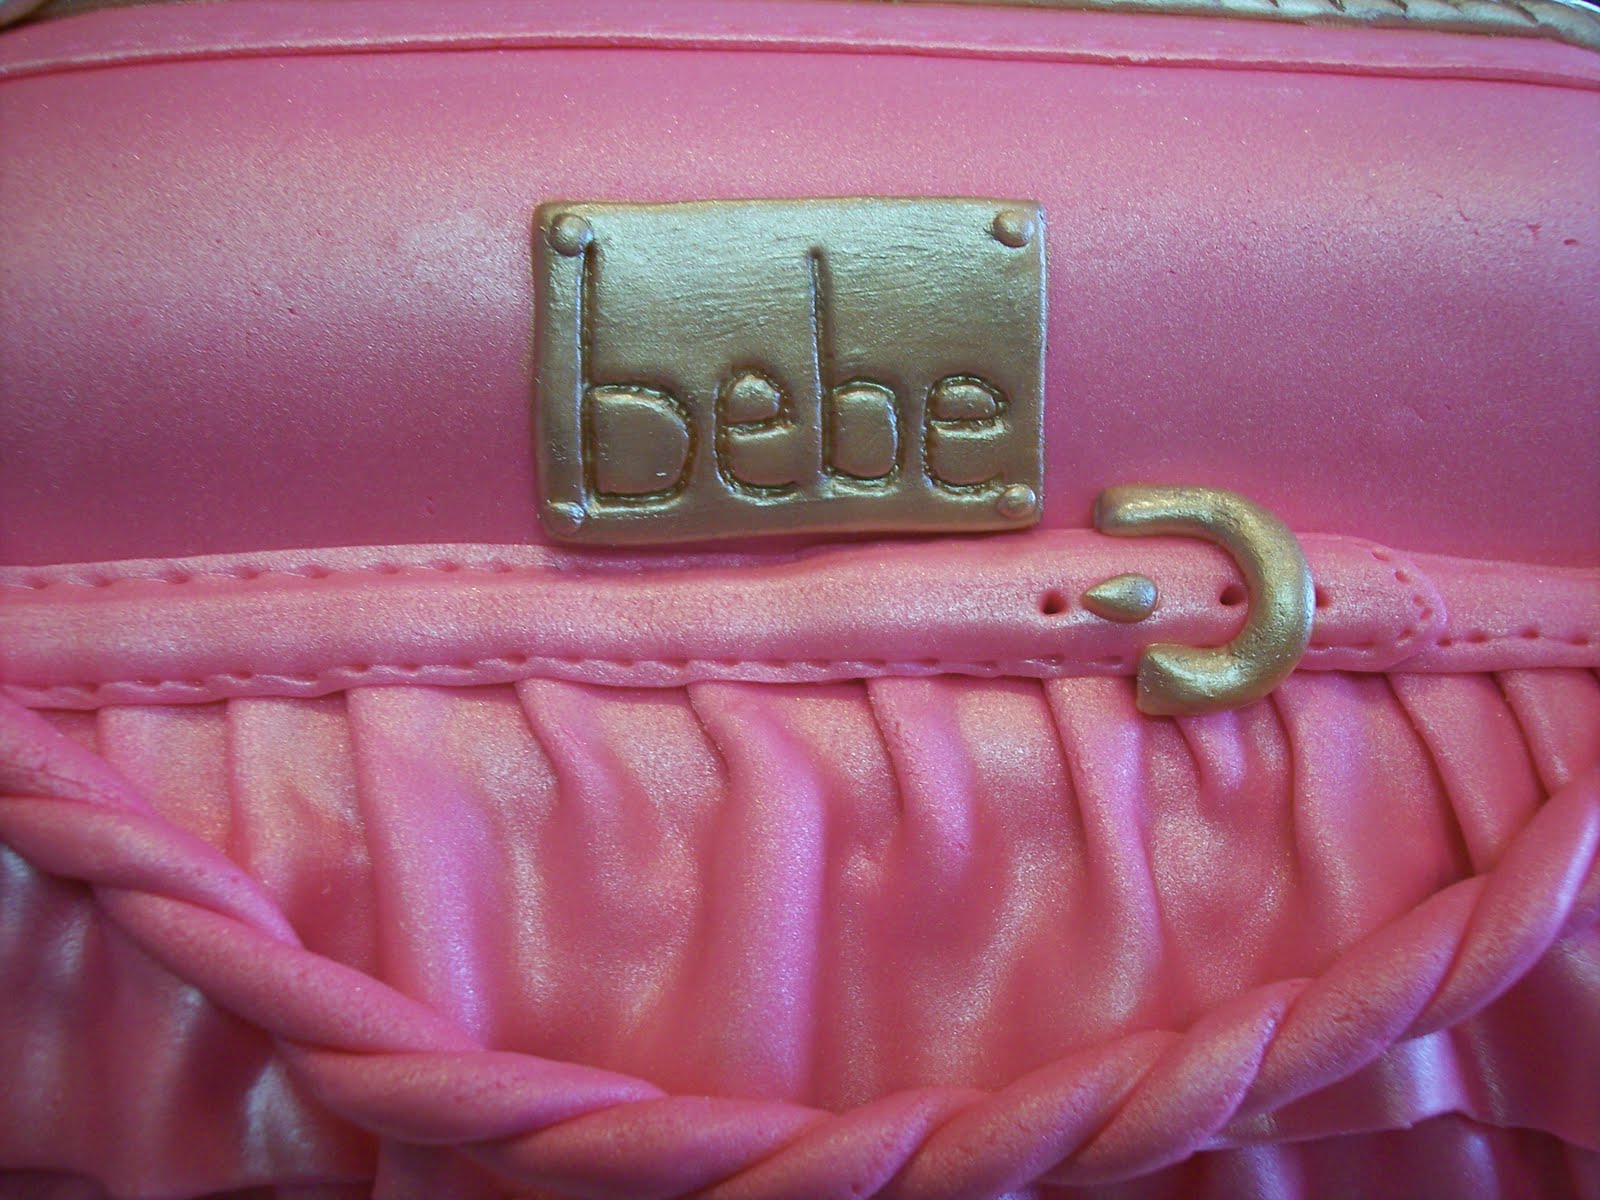 MyMoniCakes: Replica of BEBE handbag from the Summer 2010 collection